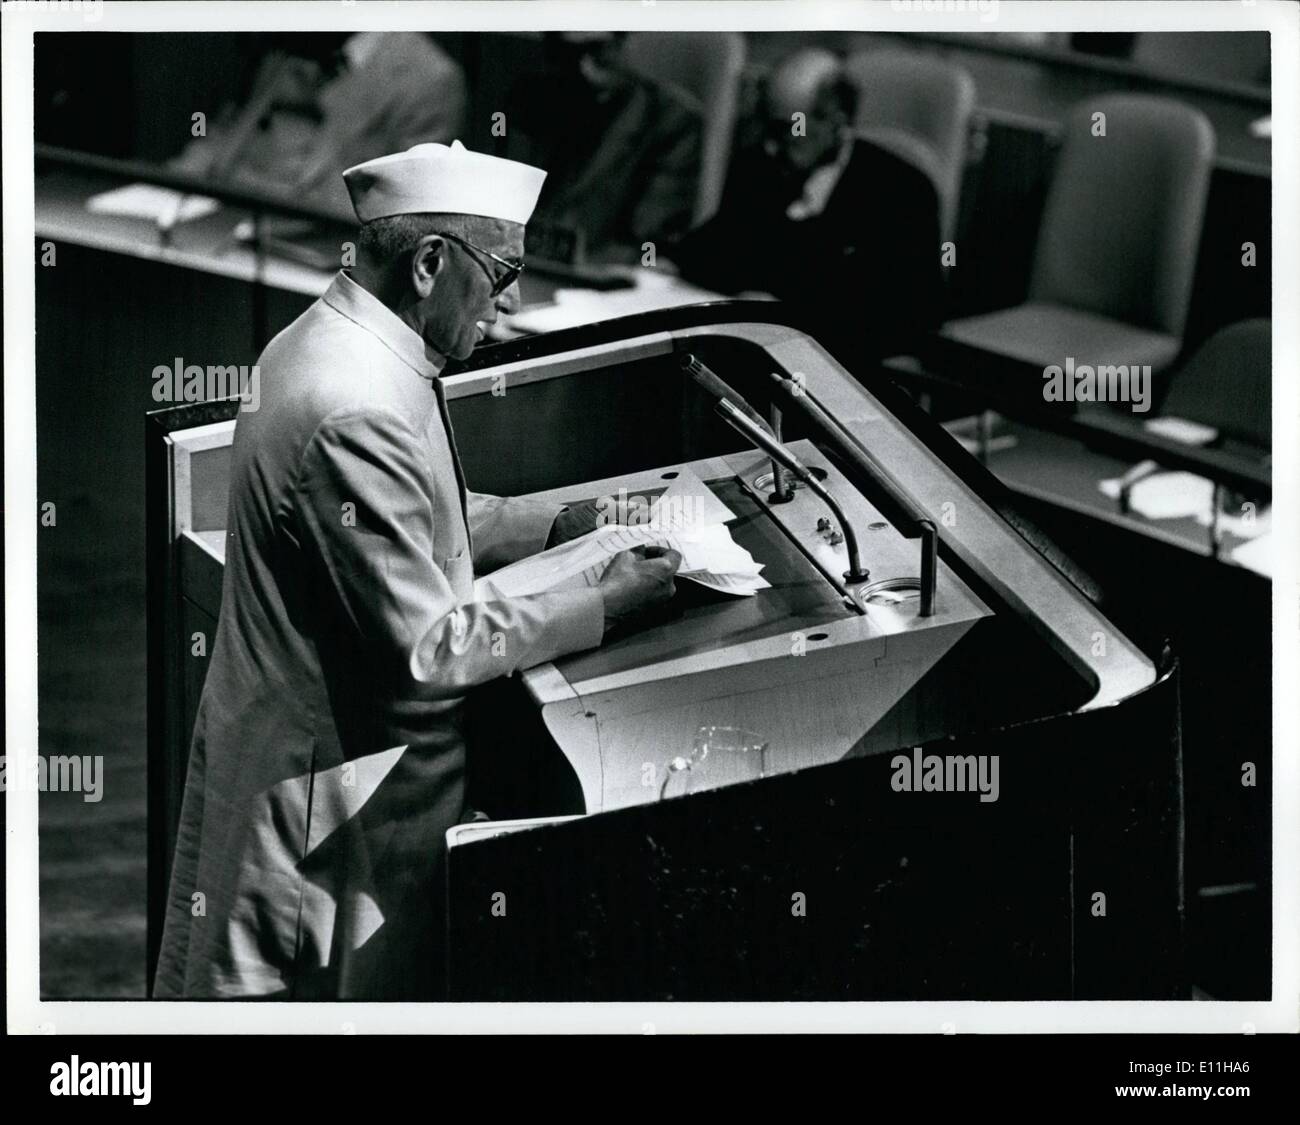 Jun. 06, 1978 - Morarji Desai UN Disarament Stock Photo